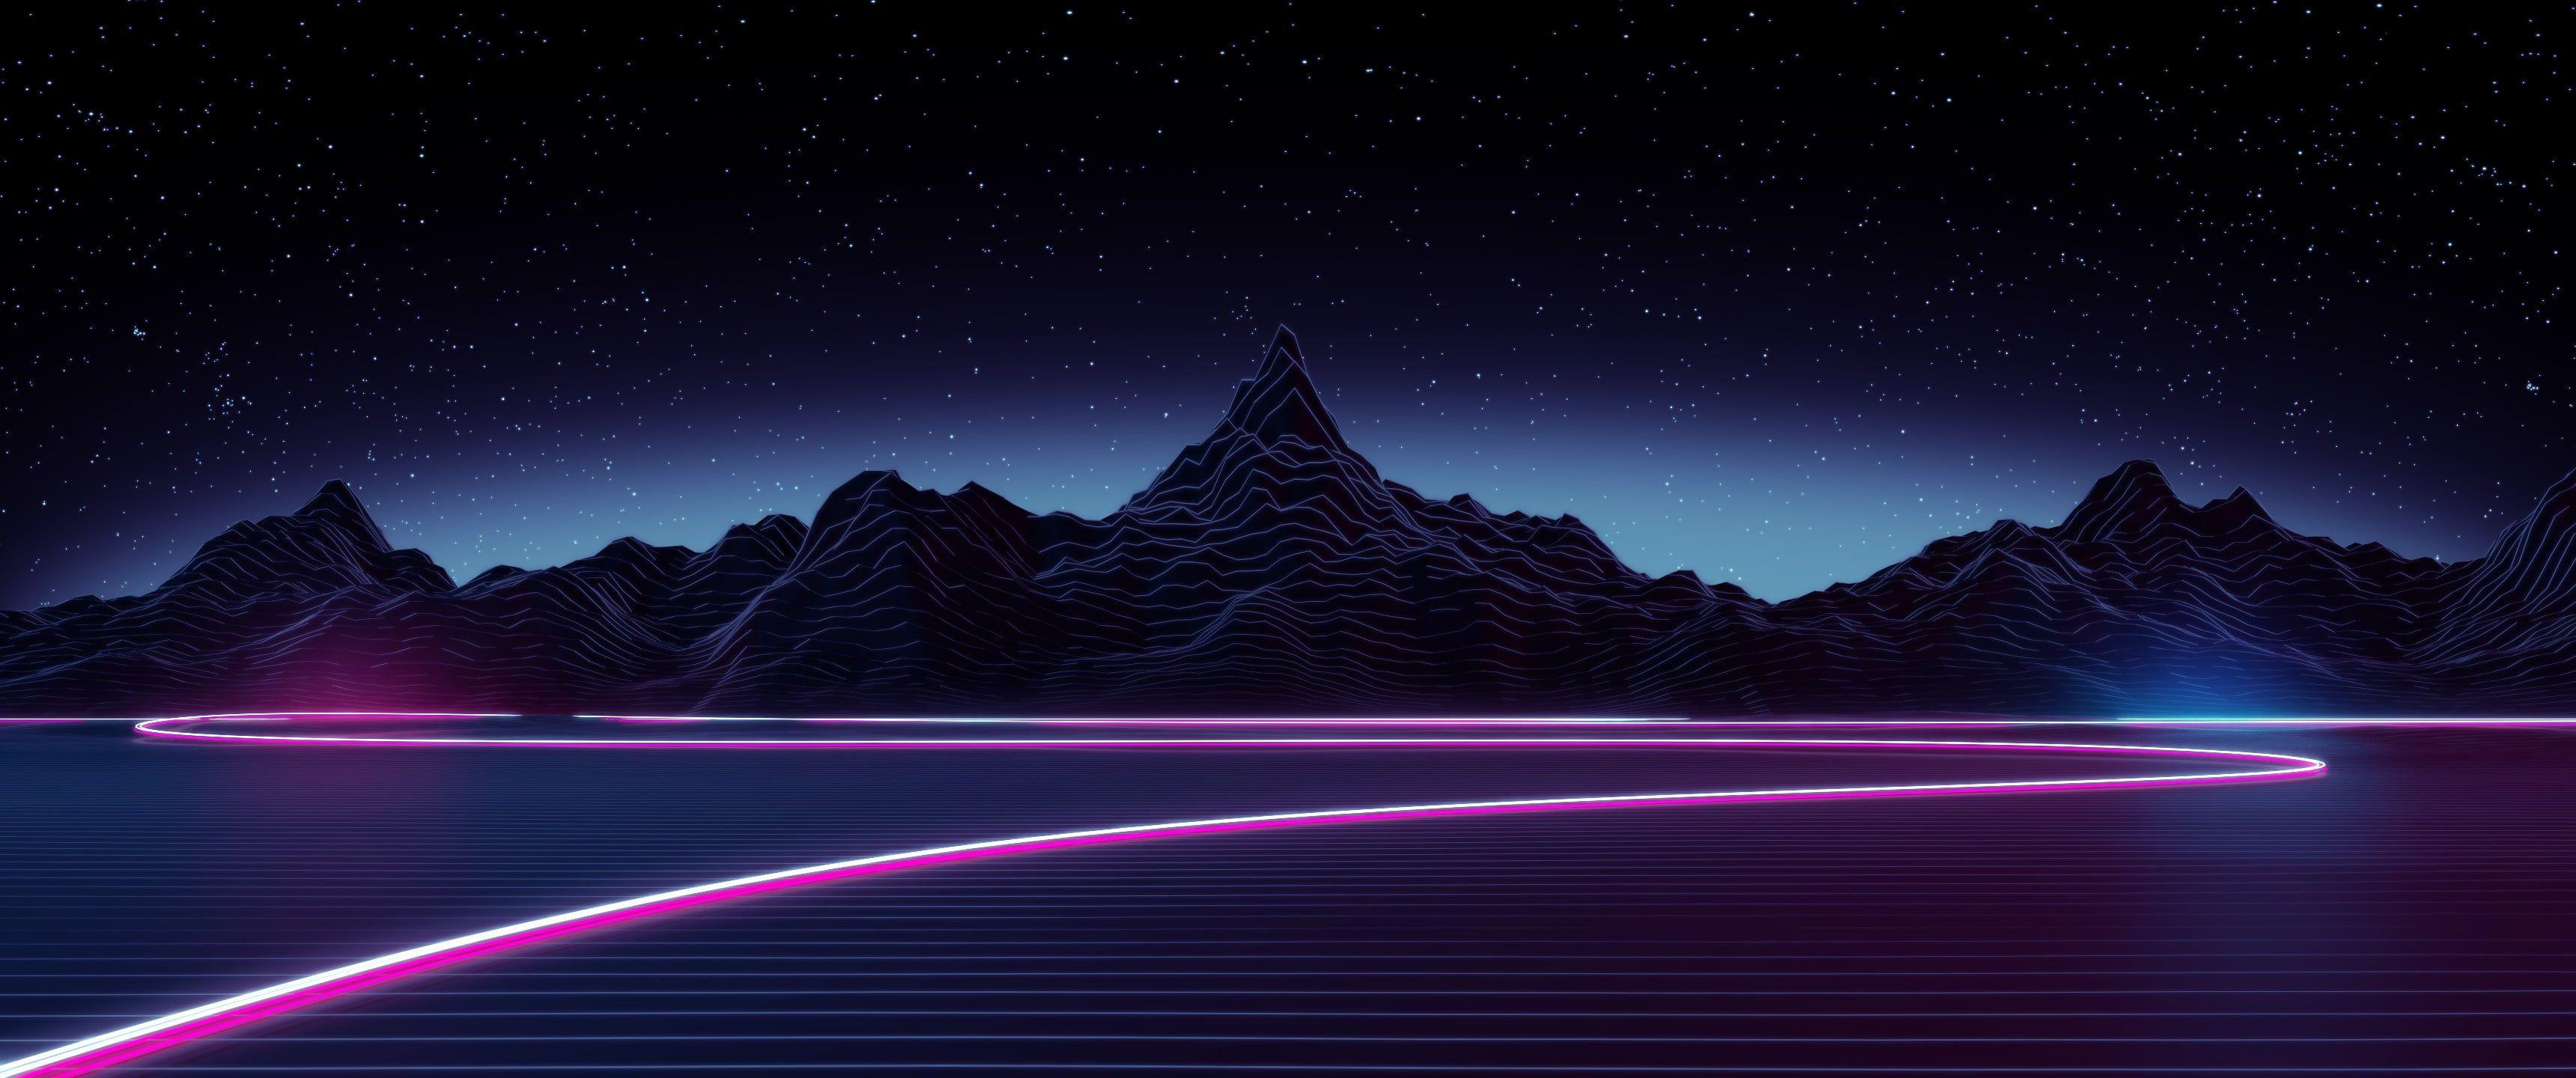 black mountain wallpaper digital art #neon #mountains #lake #stars